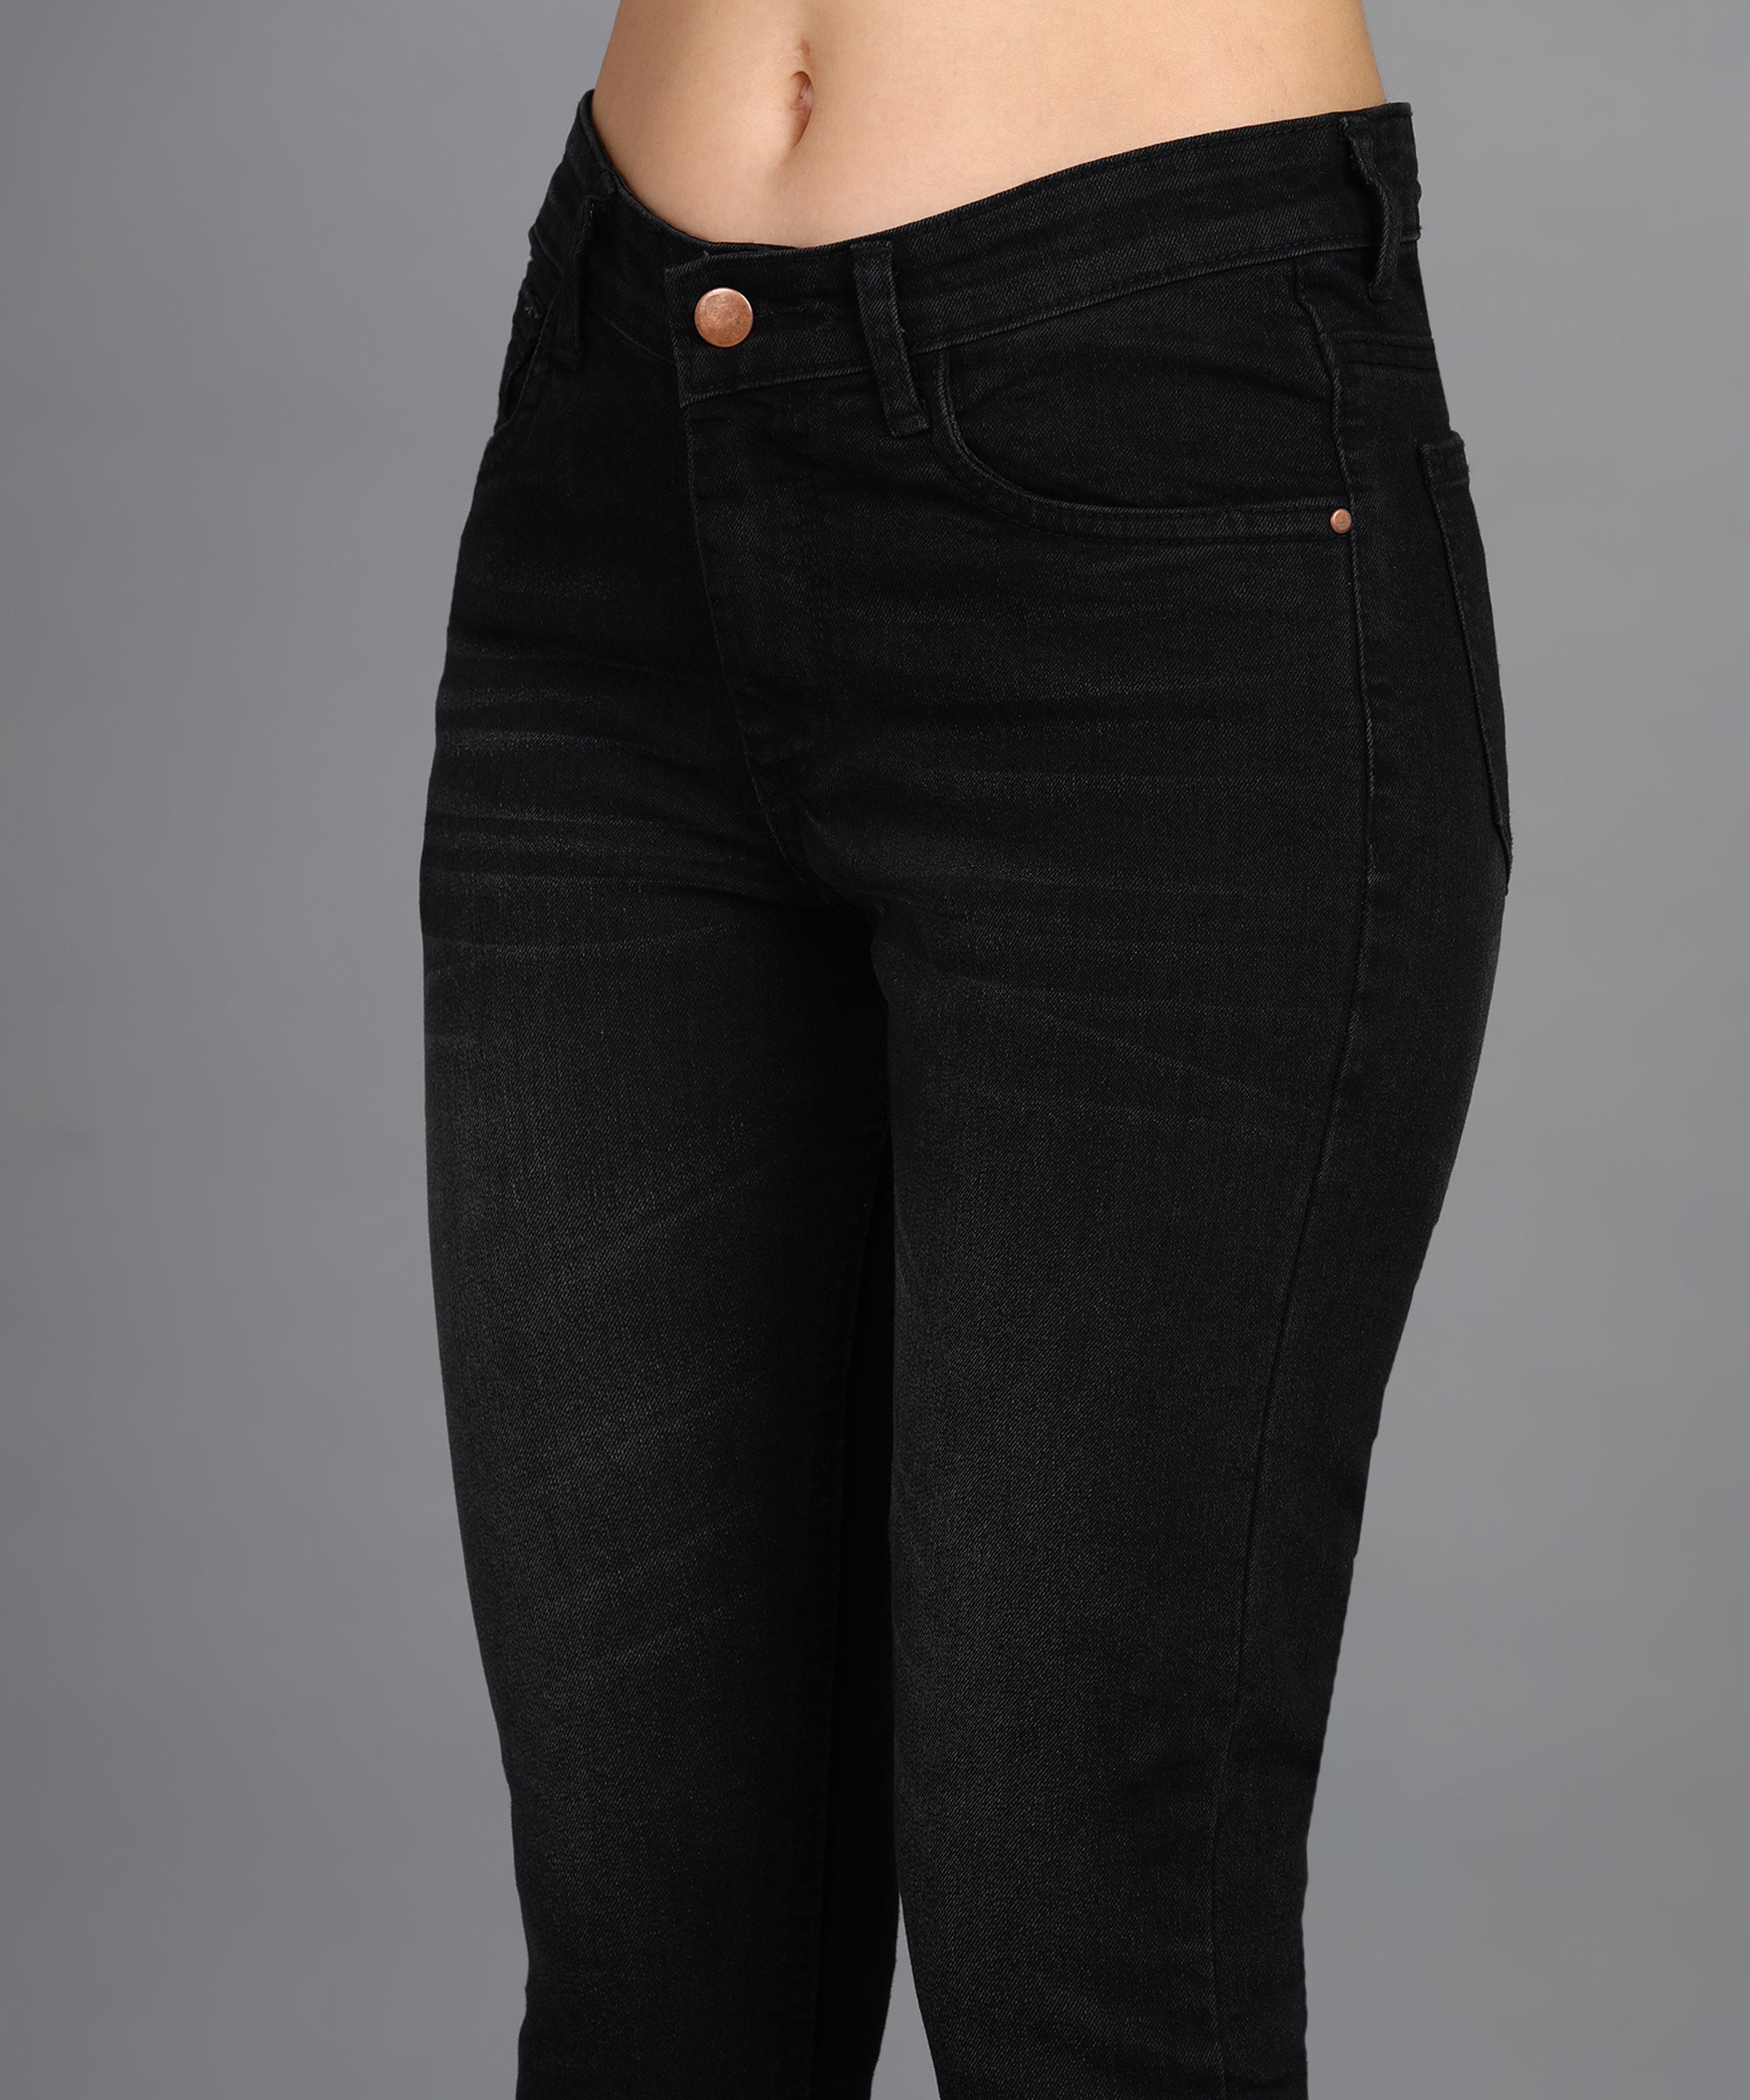 Urbano Fashion Women's Black Skinny Fit Washed Jeans